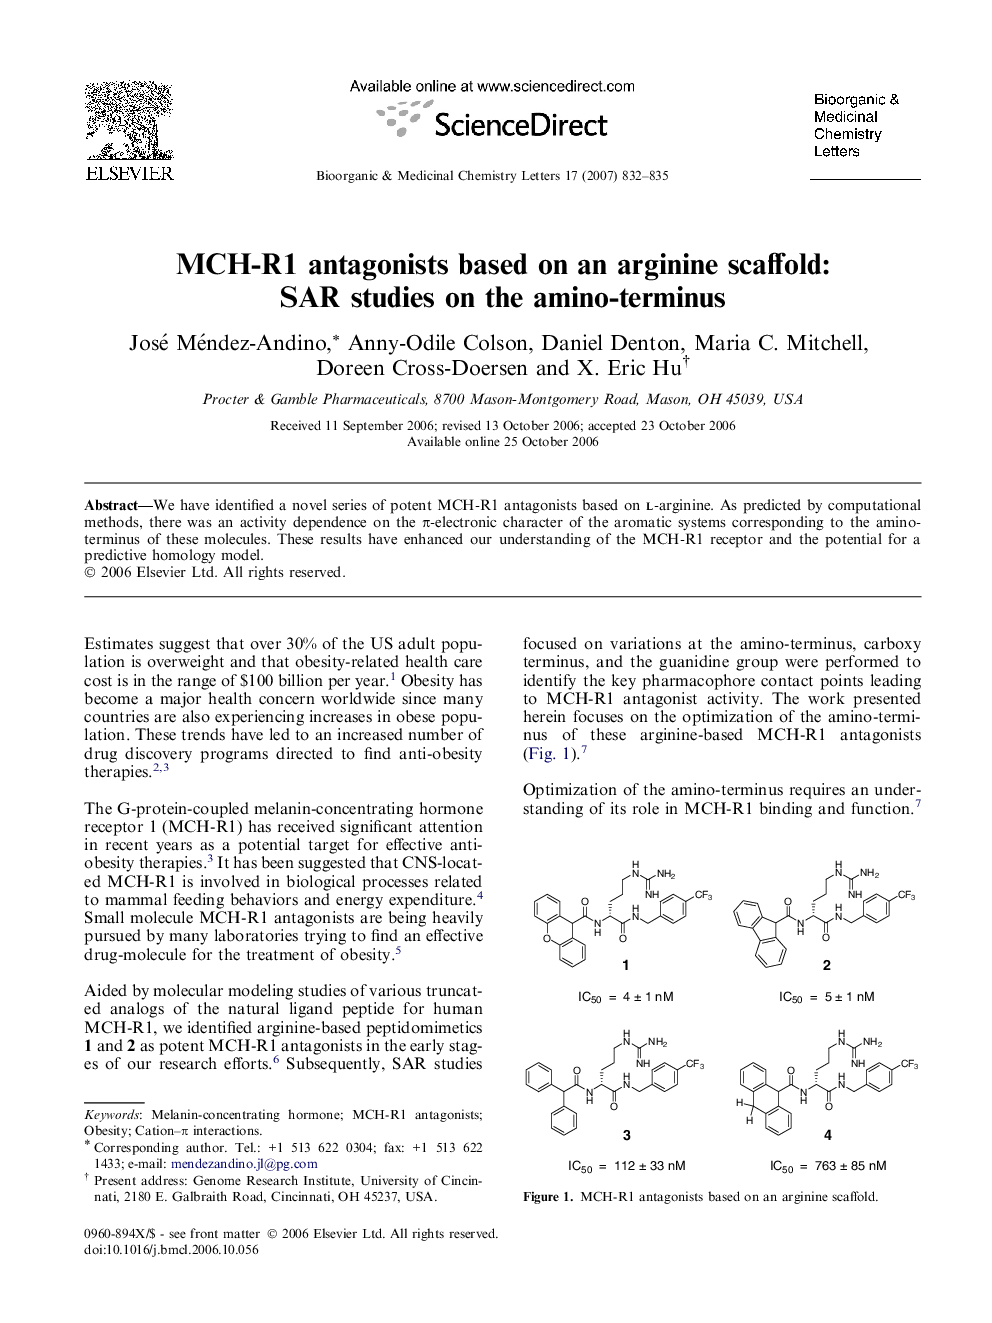 MCH-R1 antagonists based on an arginine scaffold: SAR studies on the amino-terminus